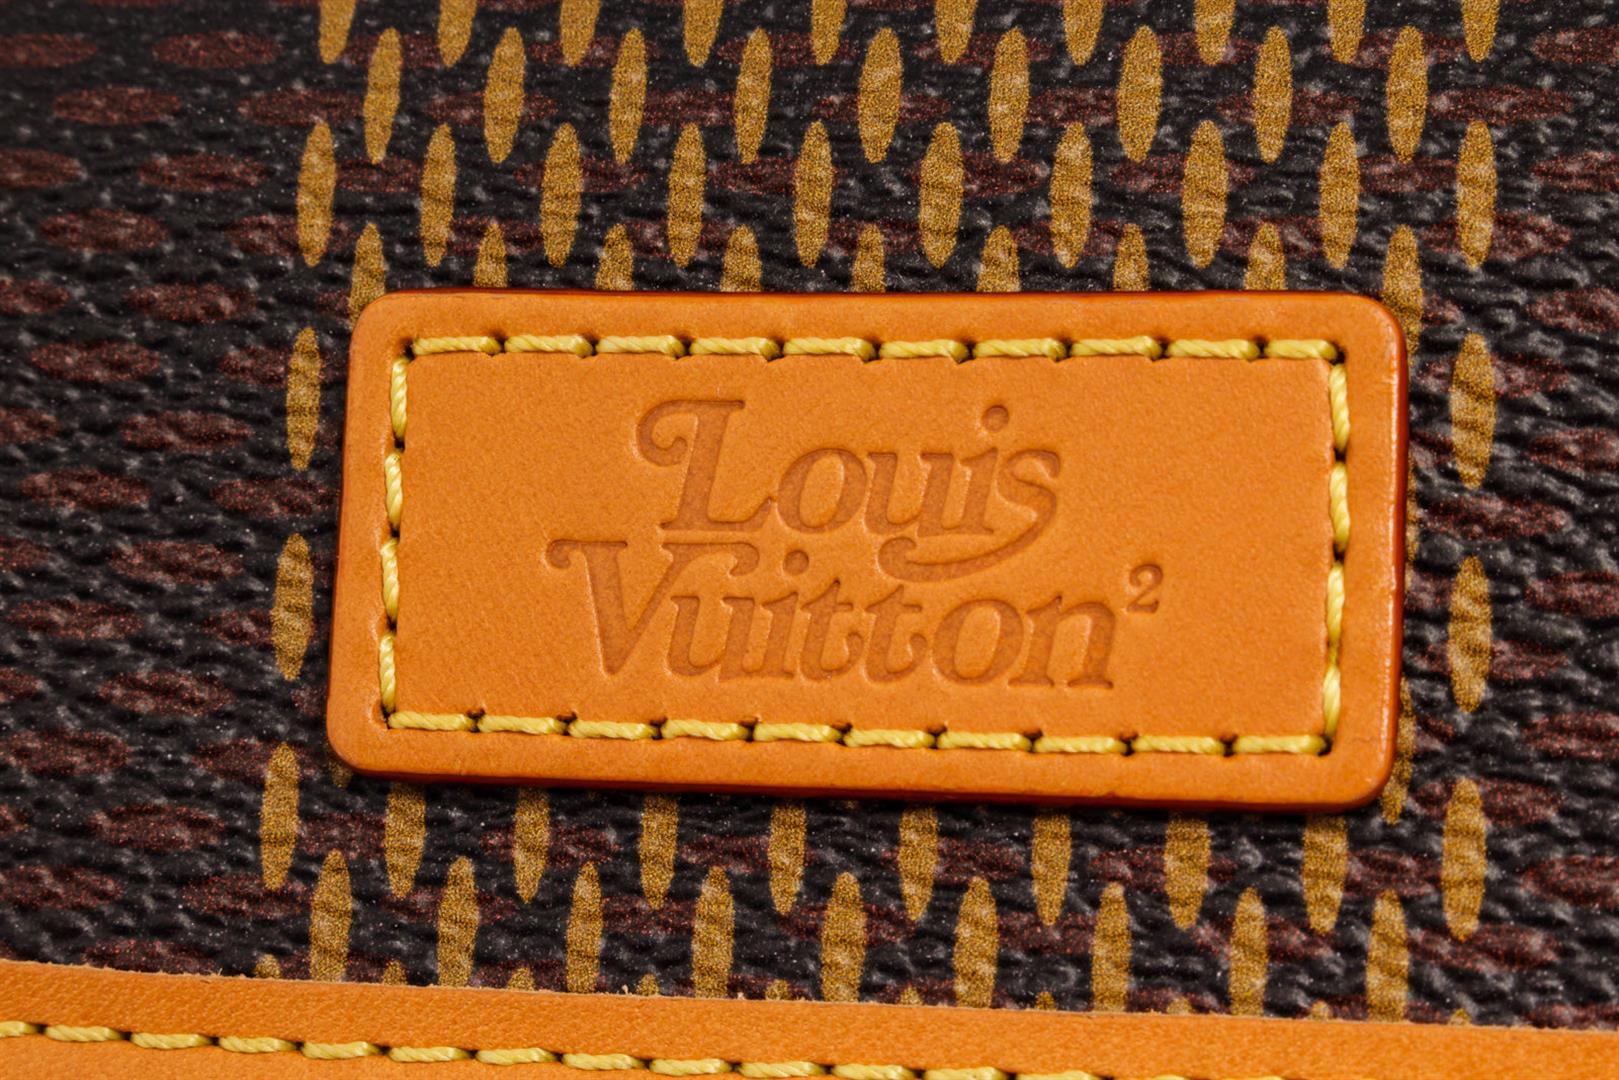 Louis Vuitton Nigo e Sling Crossbody Brown Monogram & Giant Damier  Ebene C Auction